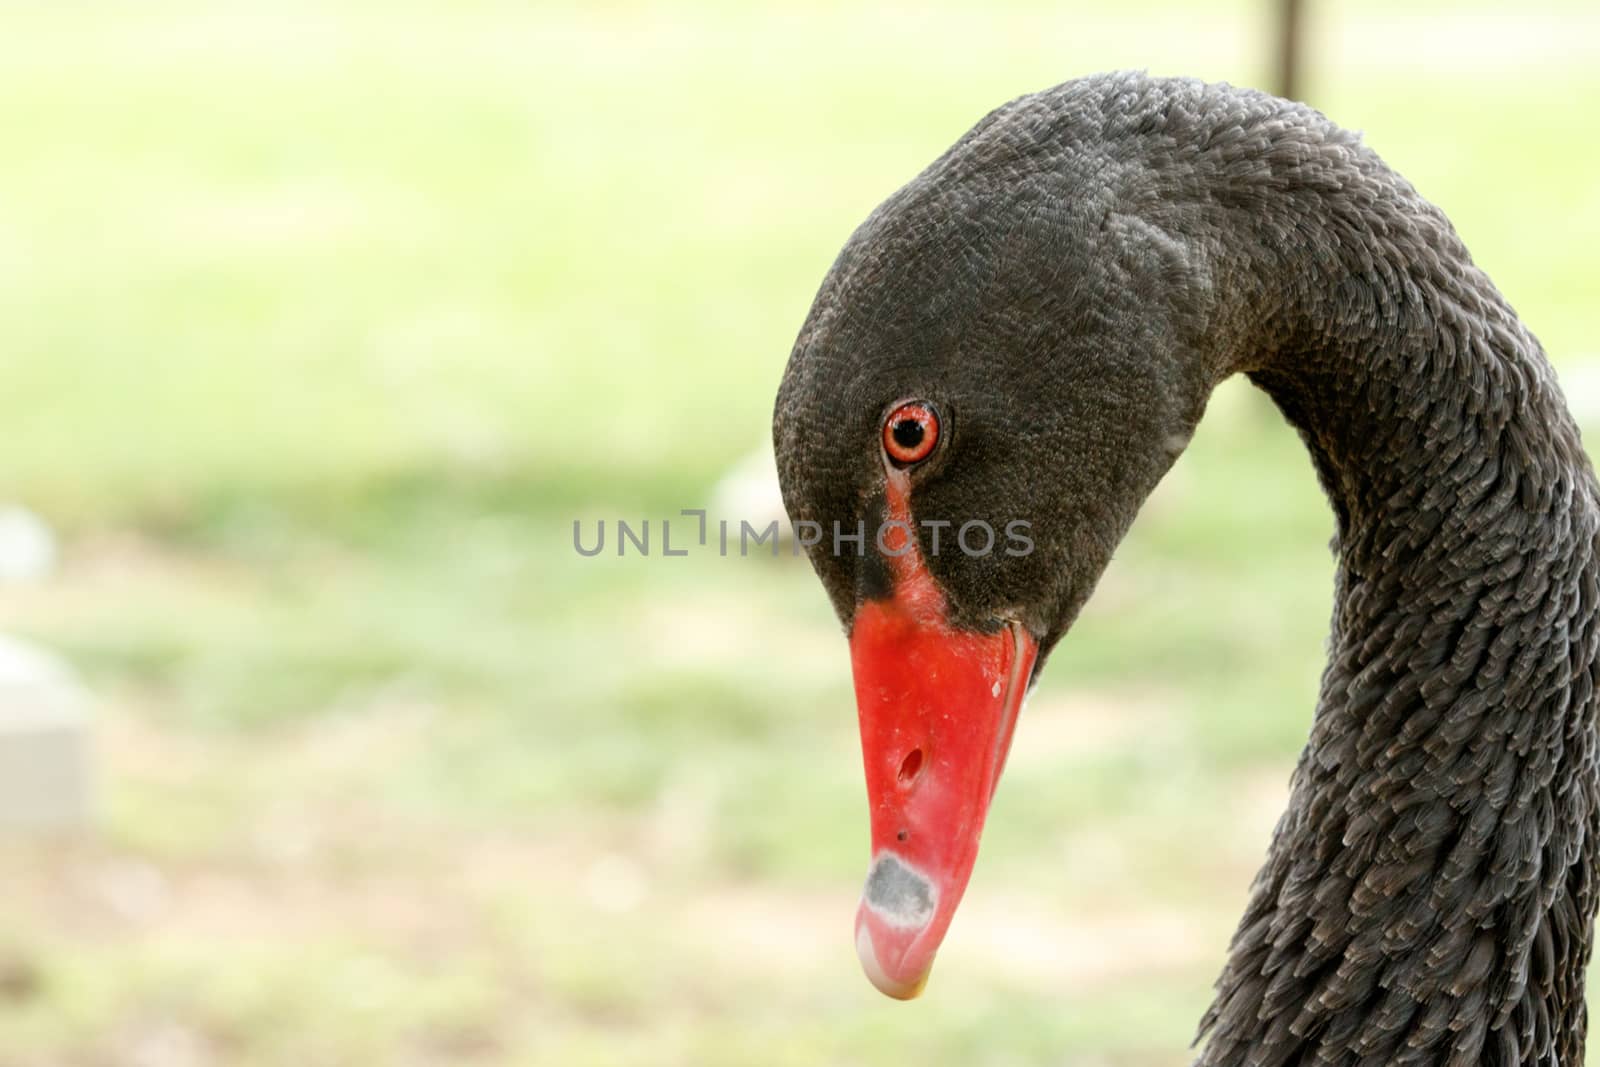 Black Swan bowing his head by markdescande